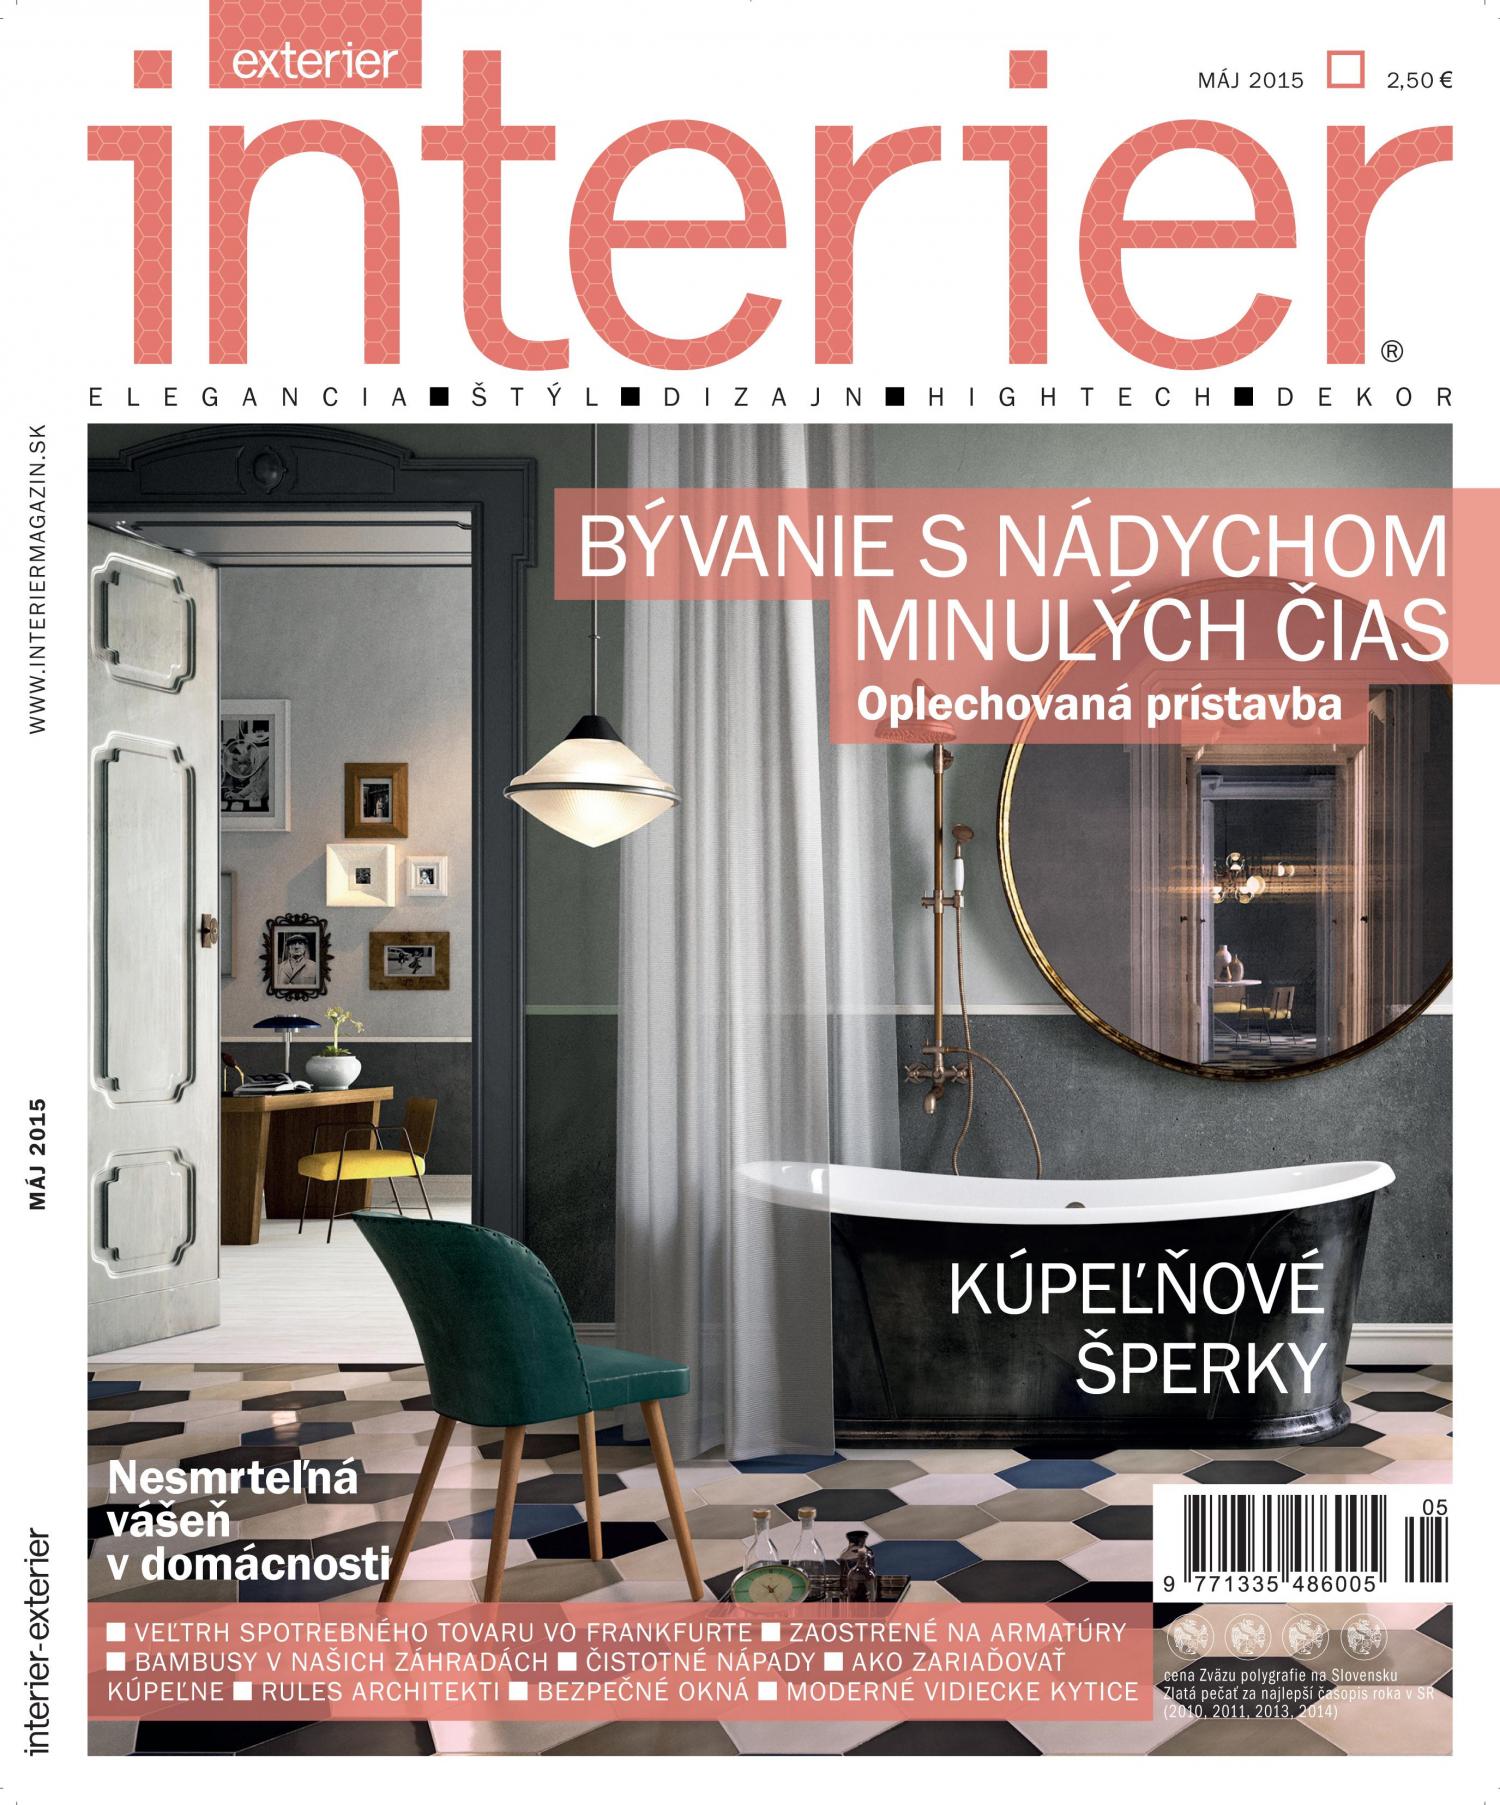 Interier/Exterier, 05/2015, RULES Architekti, 62-65